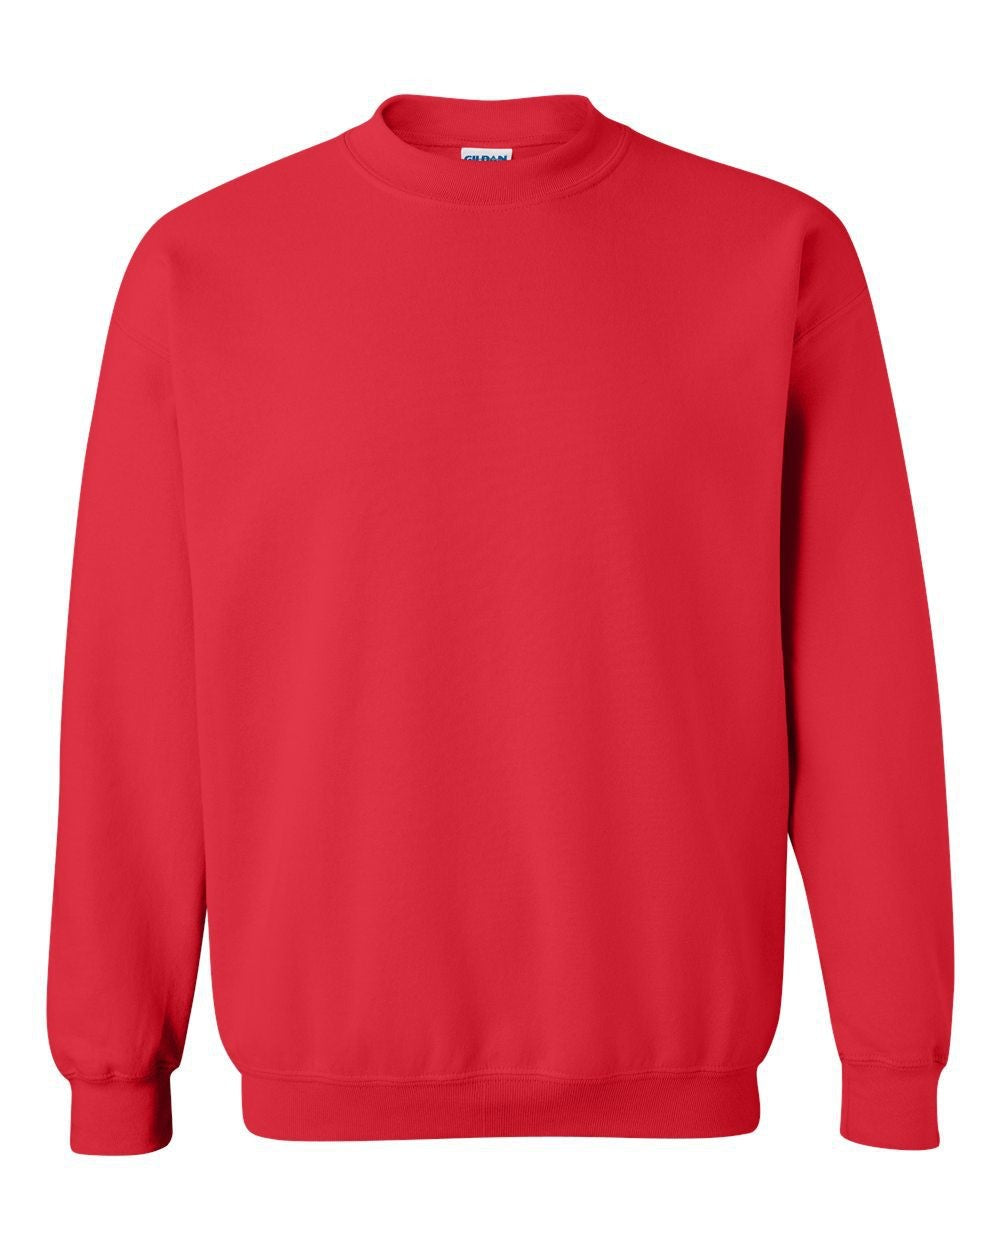 Basic pullover sweatshirt- Clean - Simple